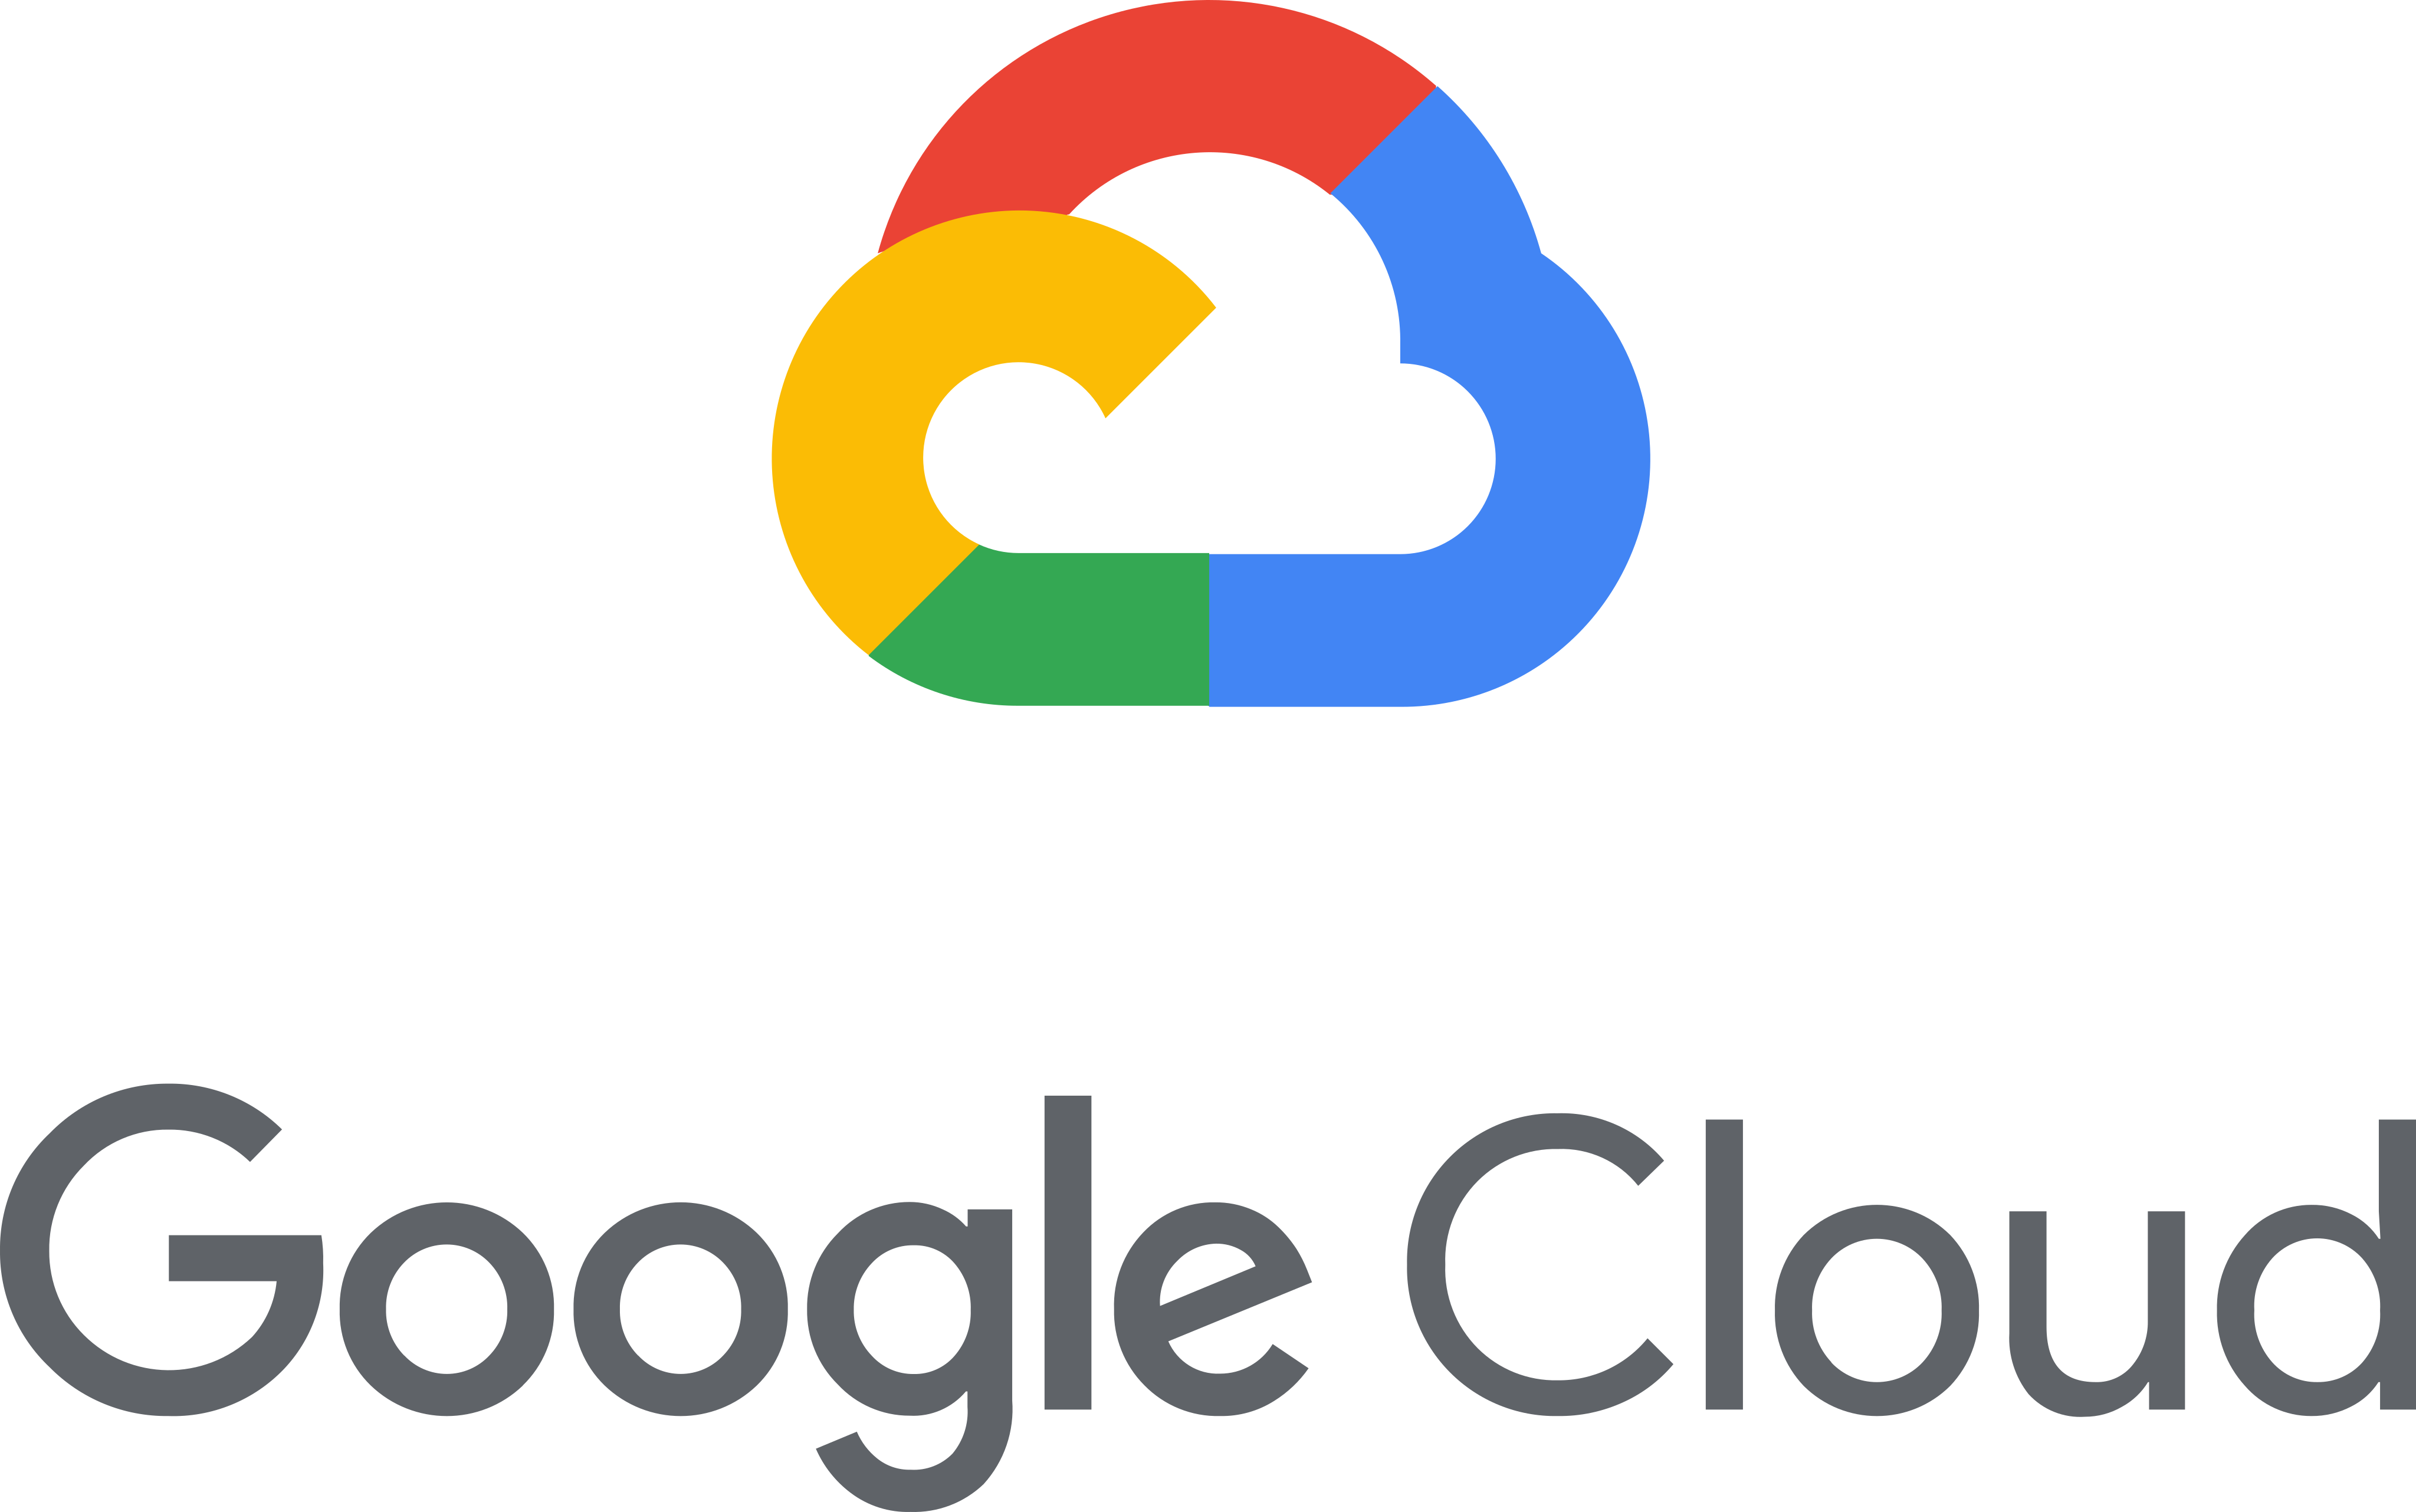 Google Cloud Logo PNG Image